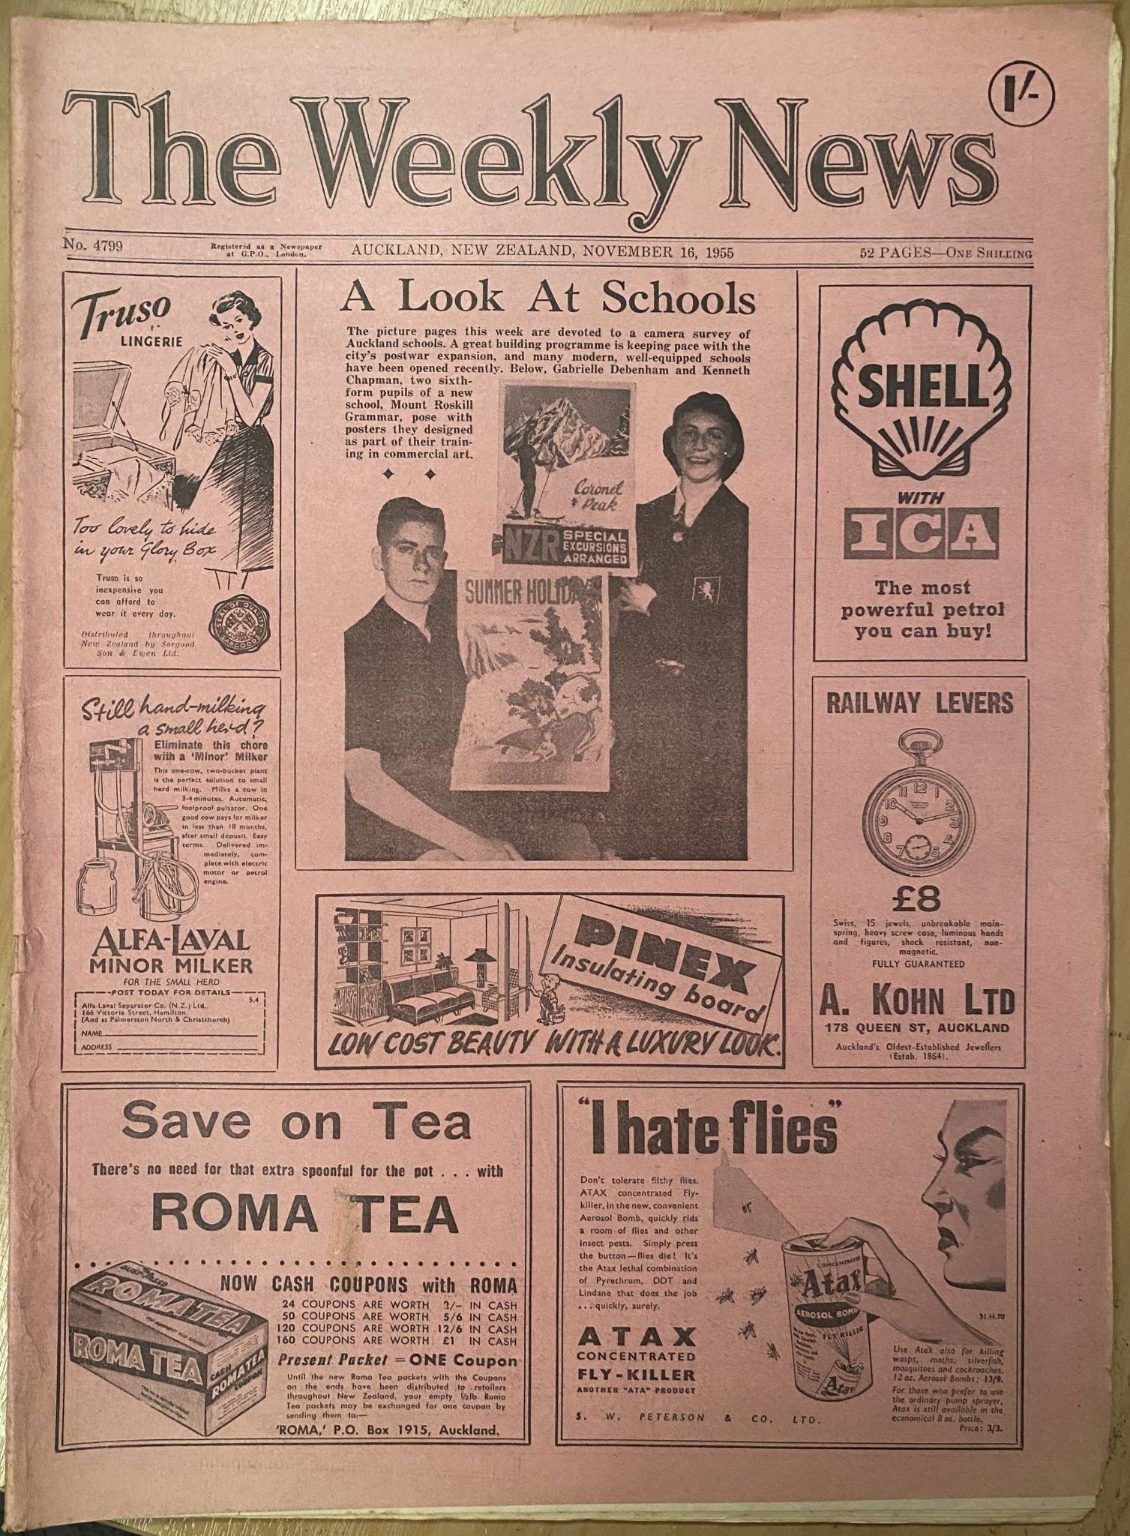 OLD NEWSPAPER: The Weekly News - No. 4799, 16 November 1955